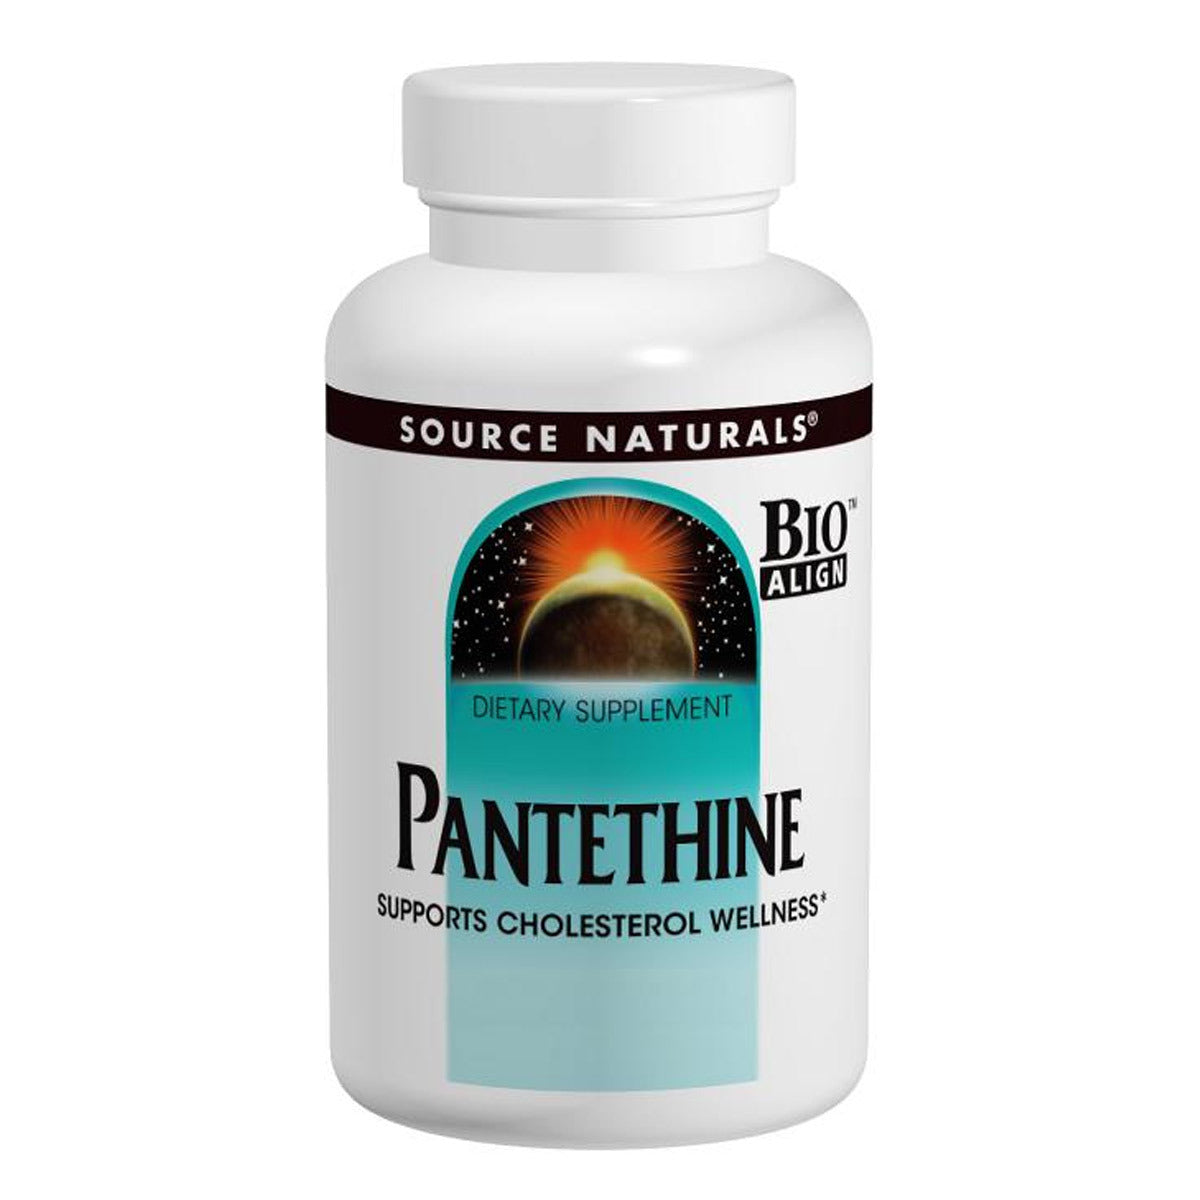 Primary image of Pantethine